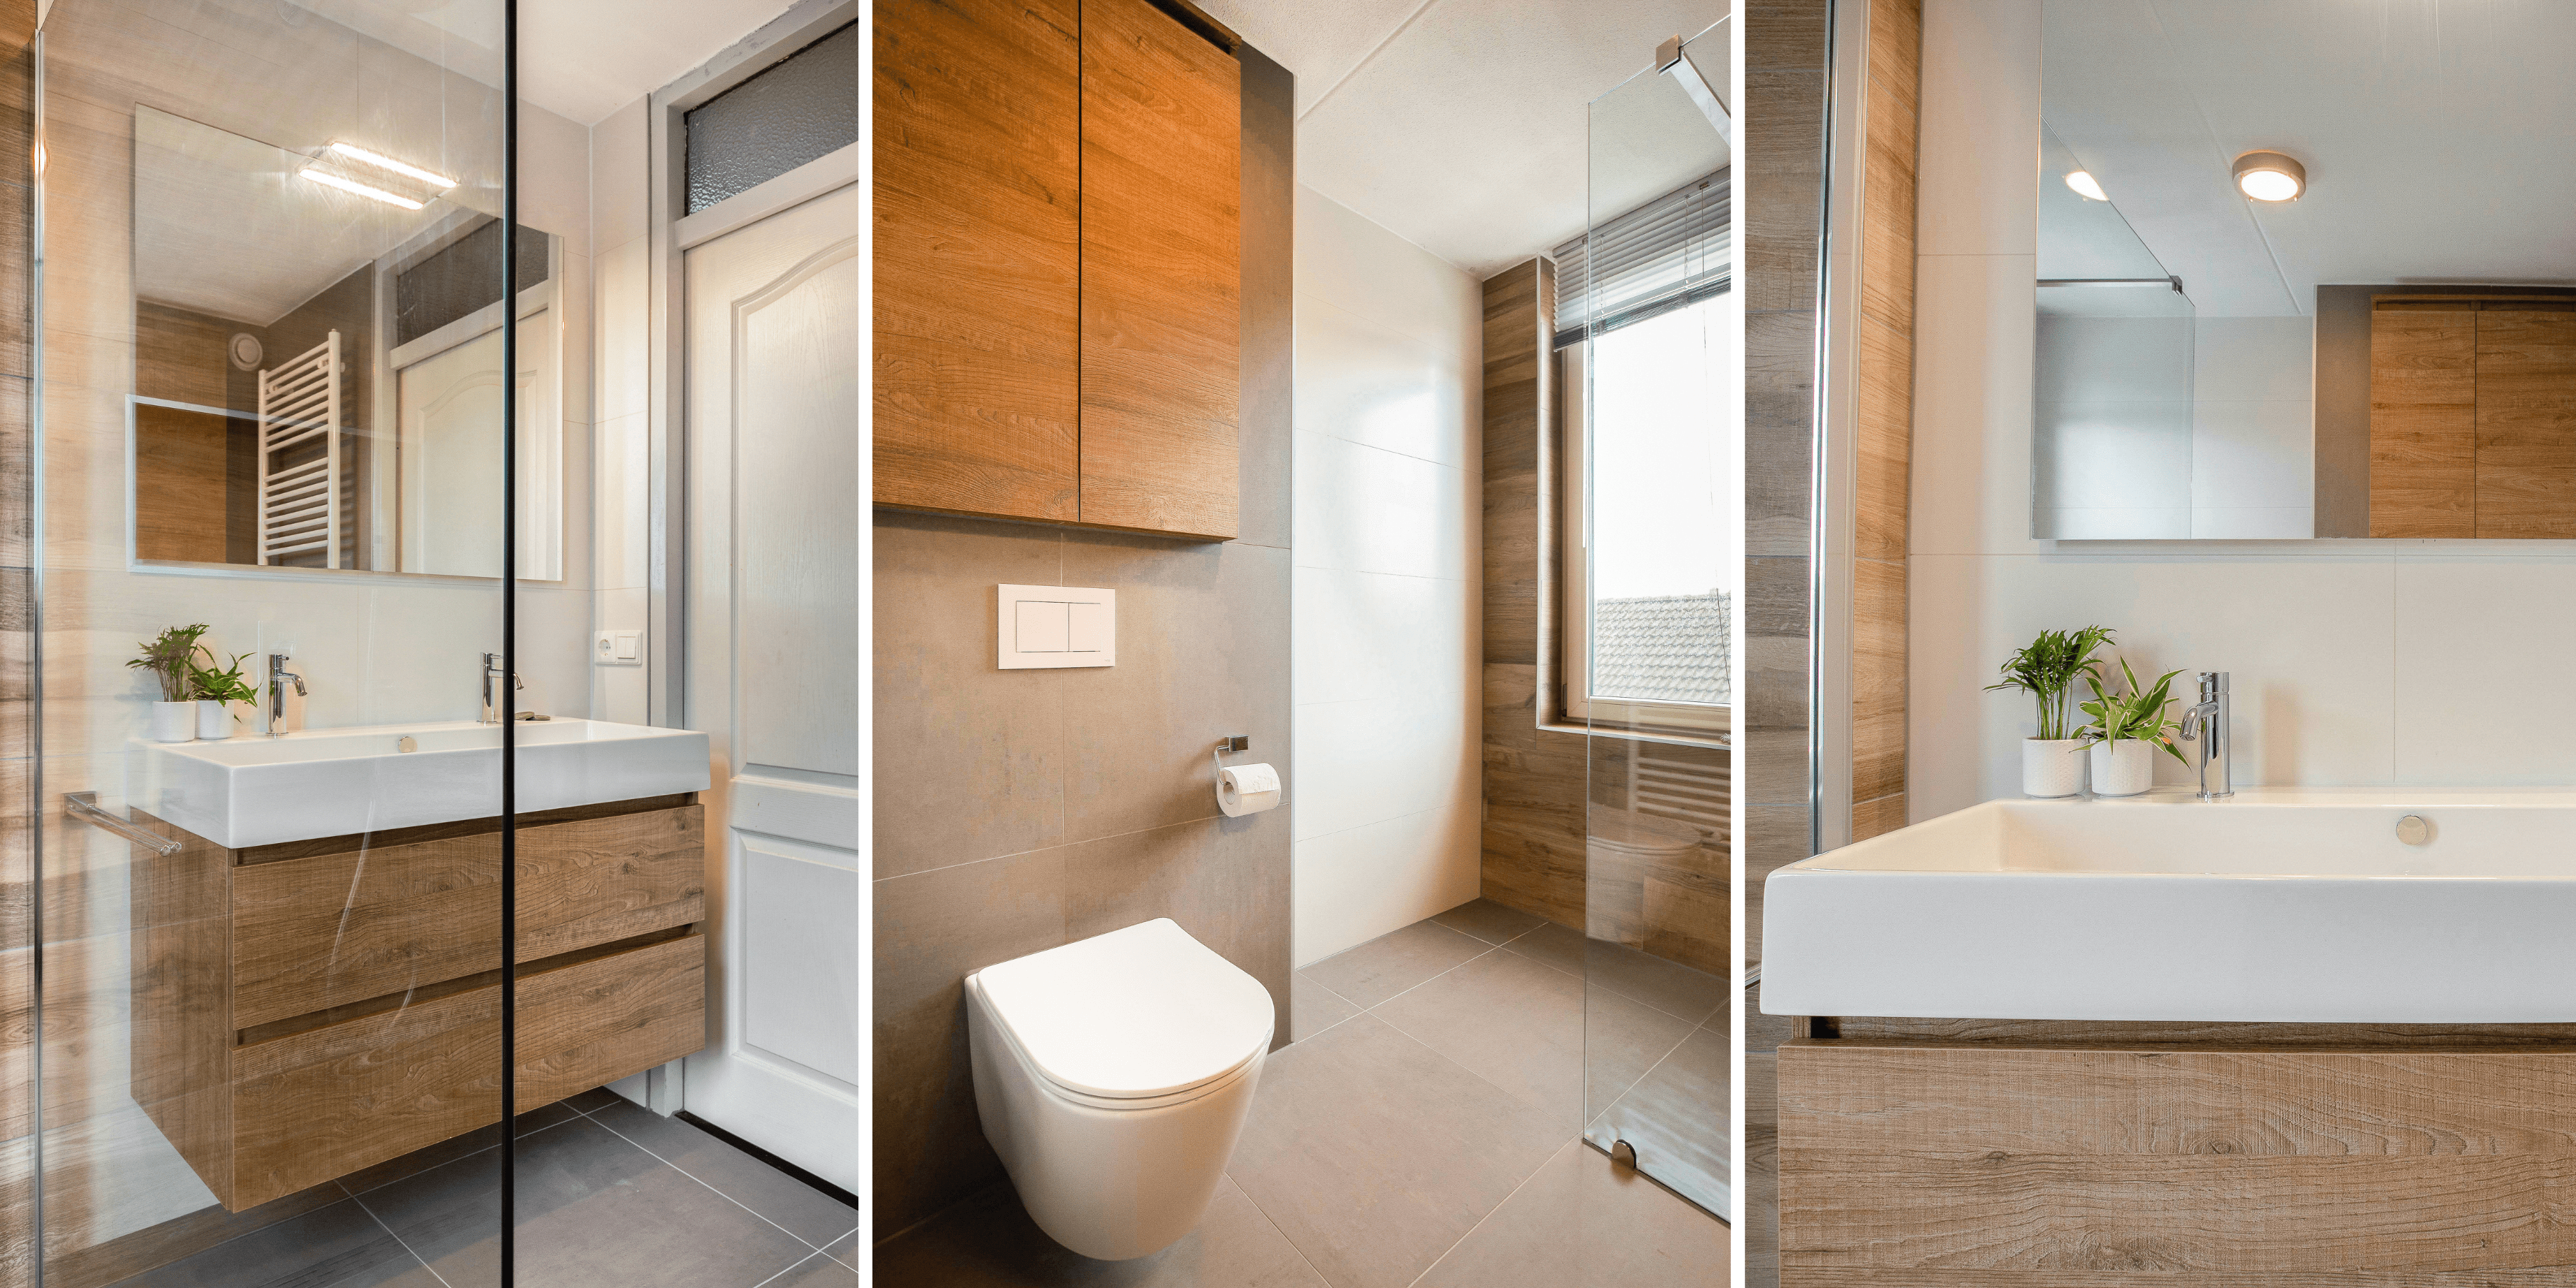 Badkamer met houtlook tegels